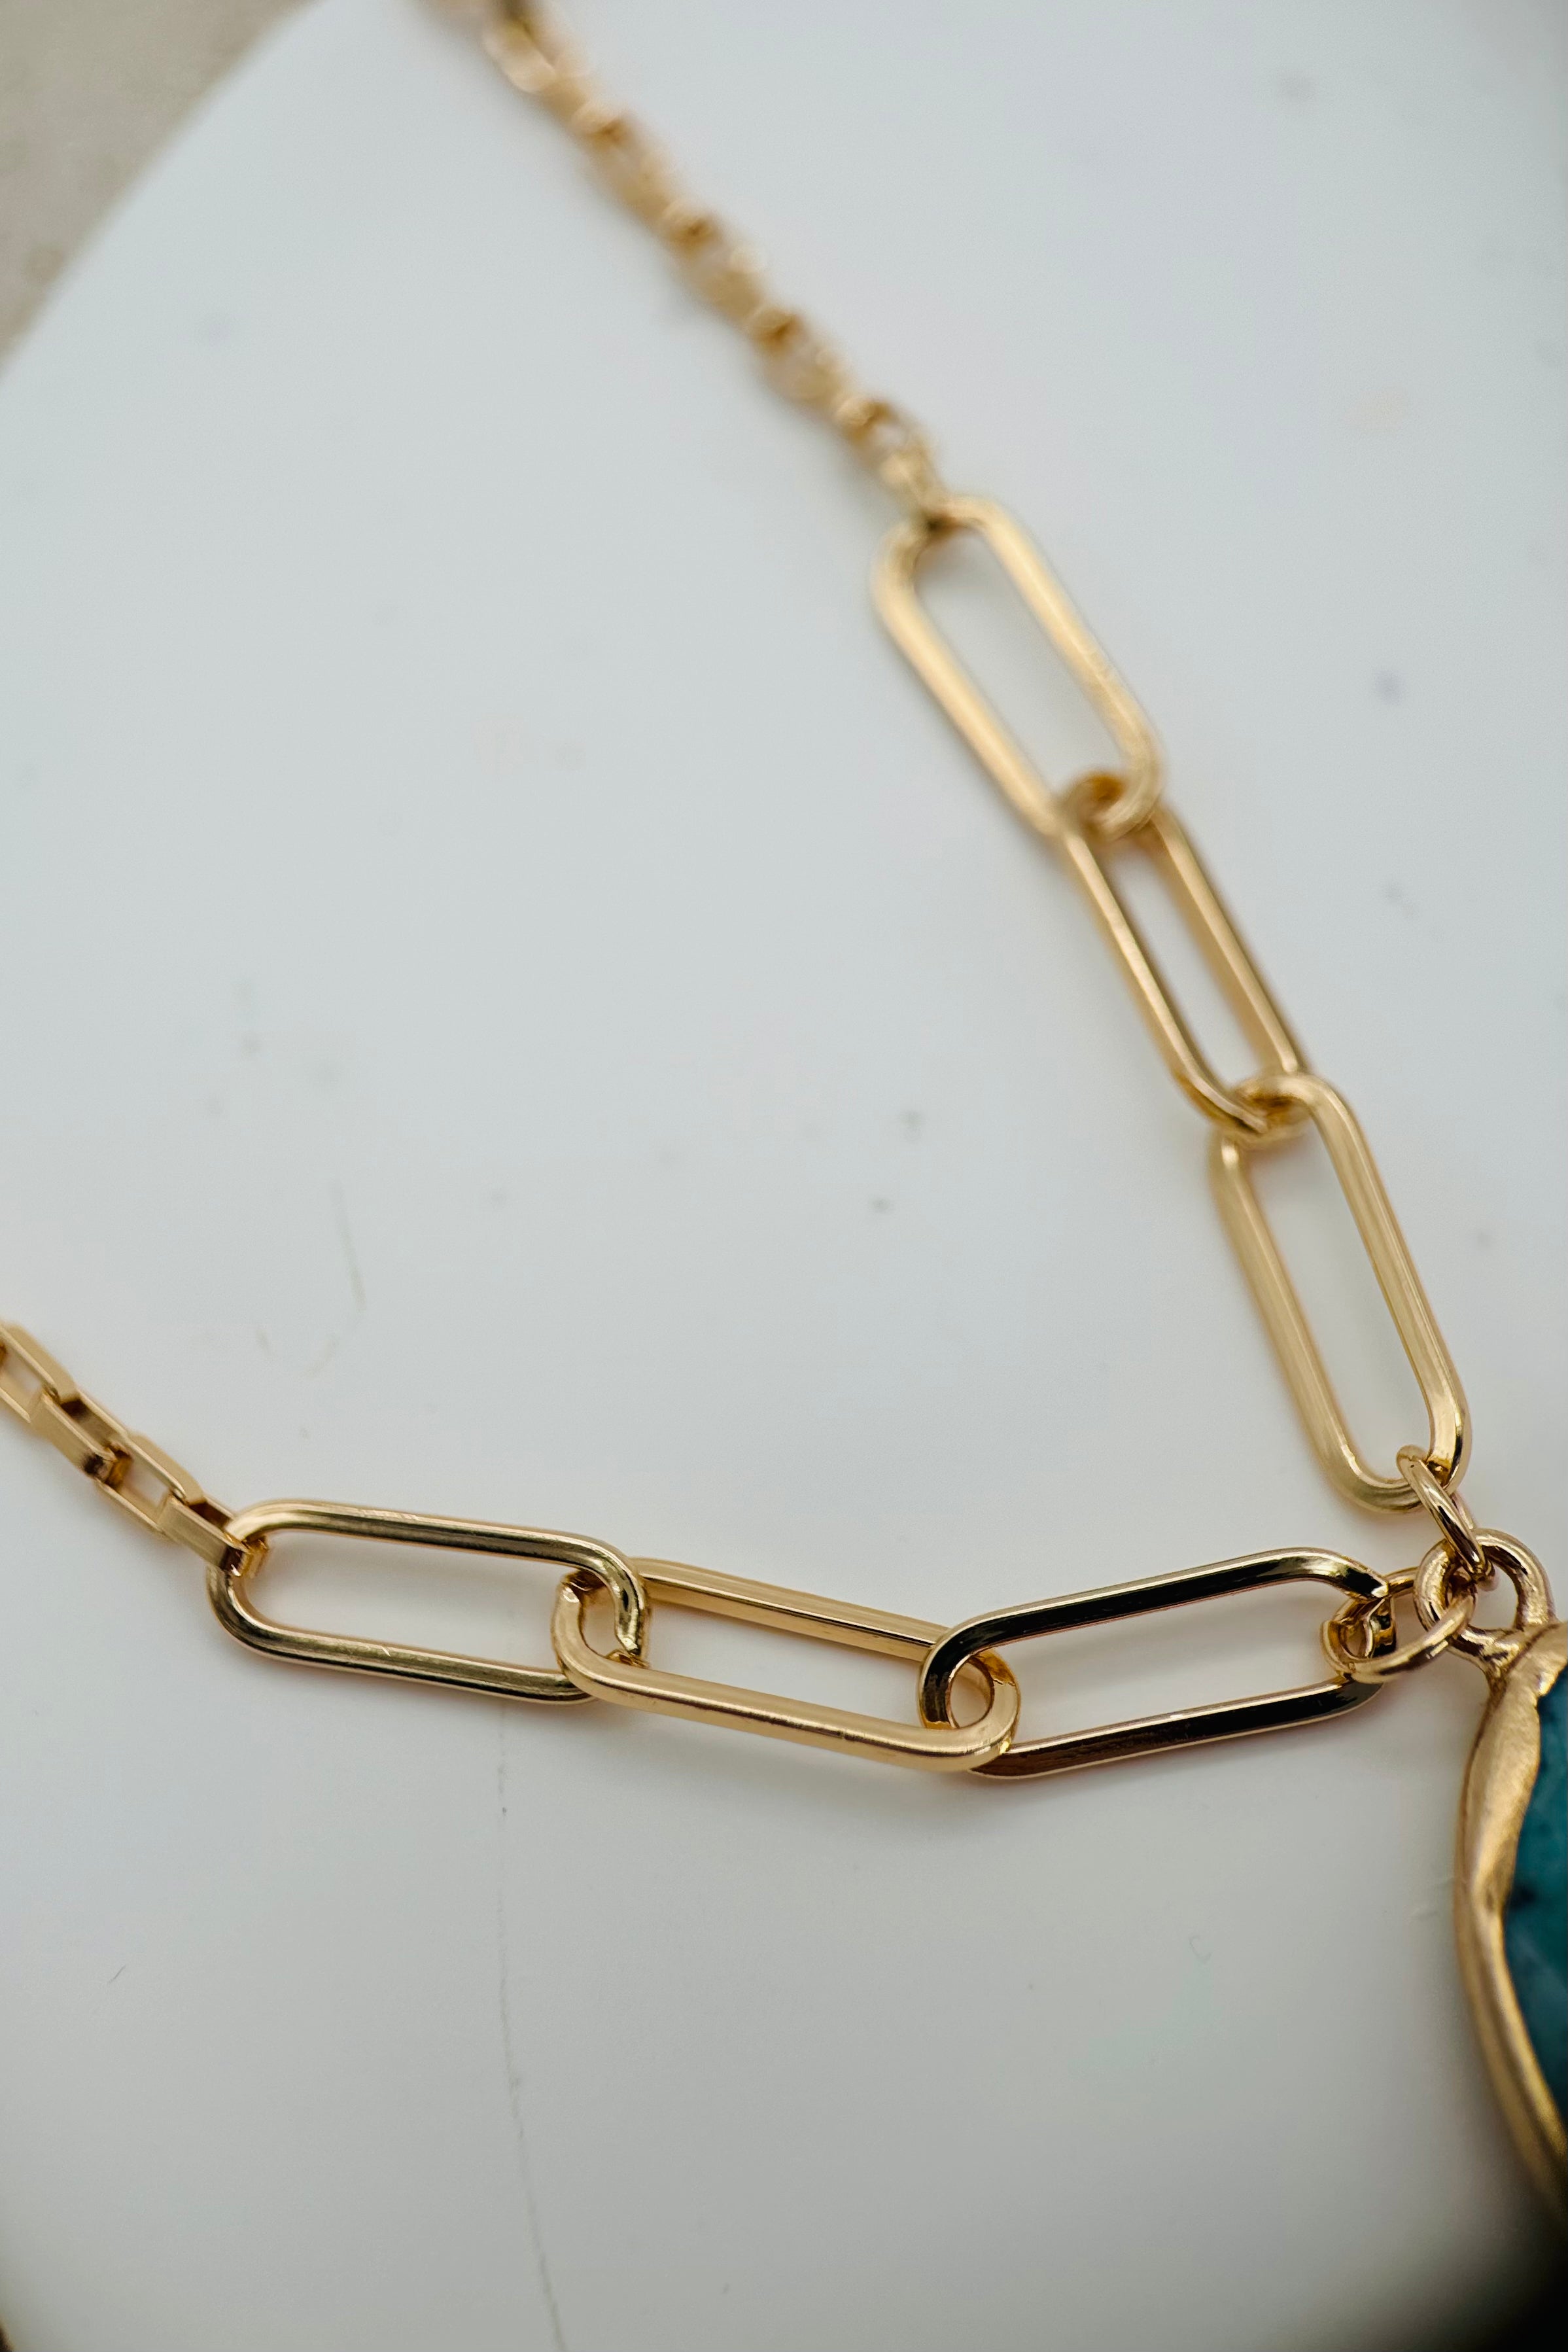 Mix Chain Turquoise Pendant Necklace